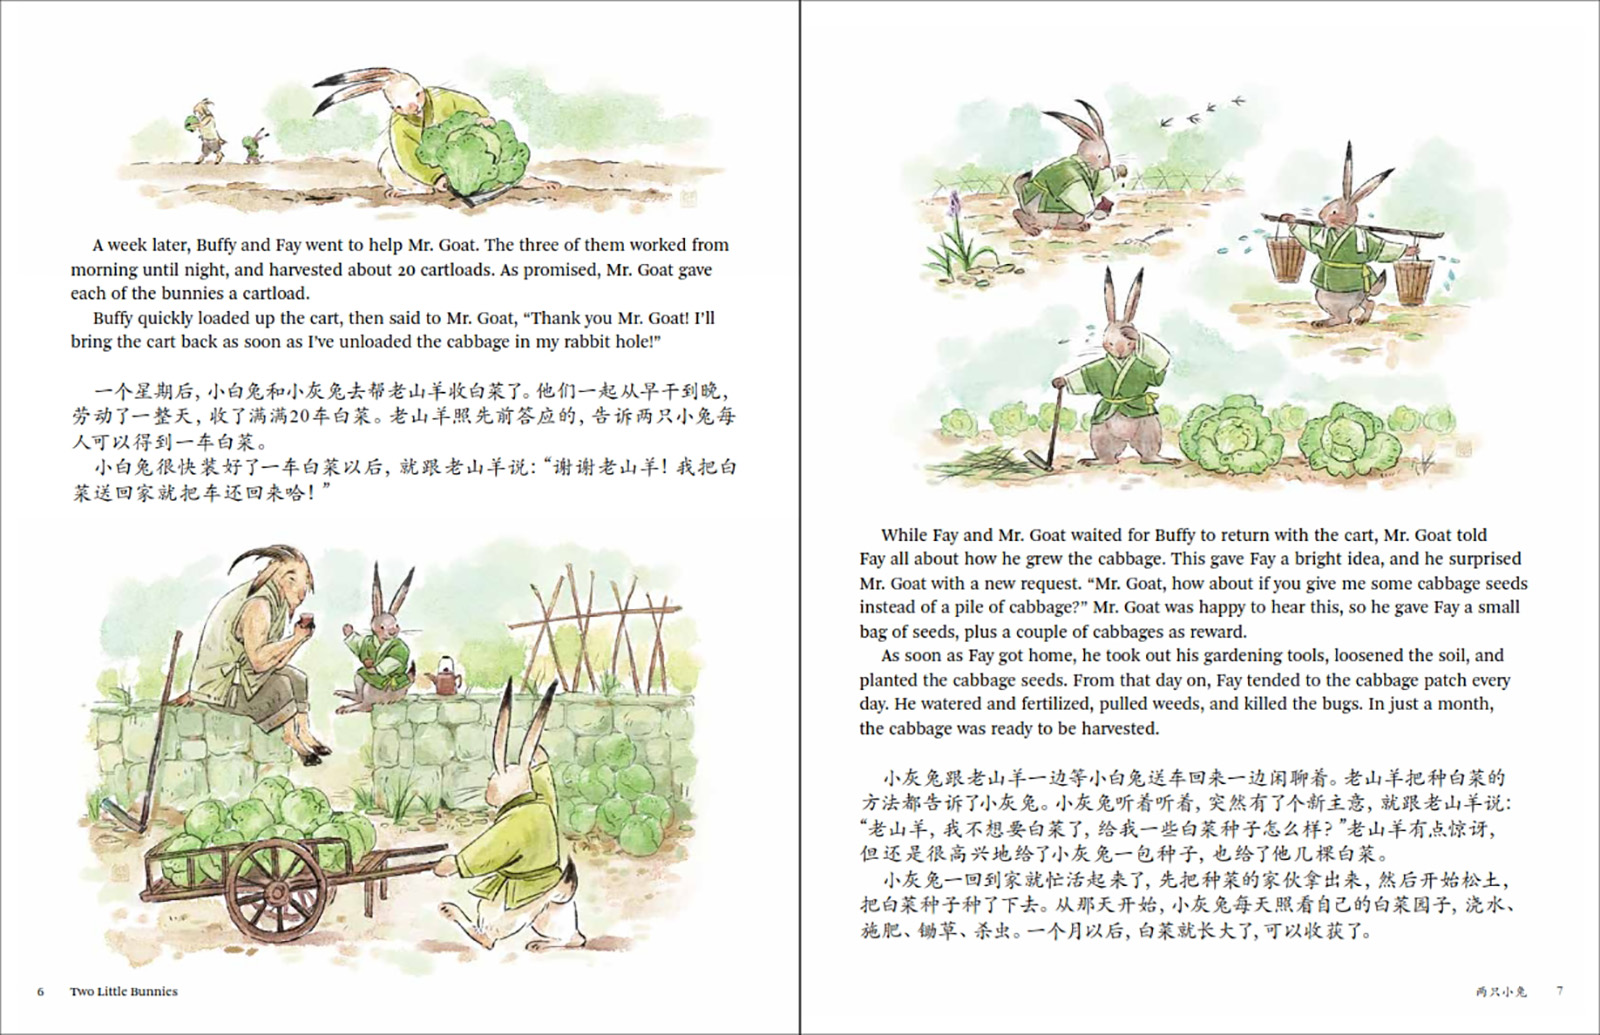 A Bilingual Treasury of Chinese Folktales